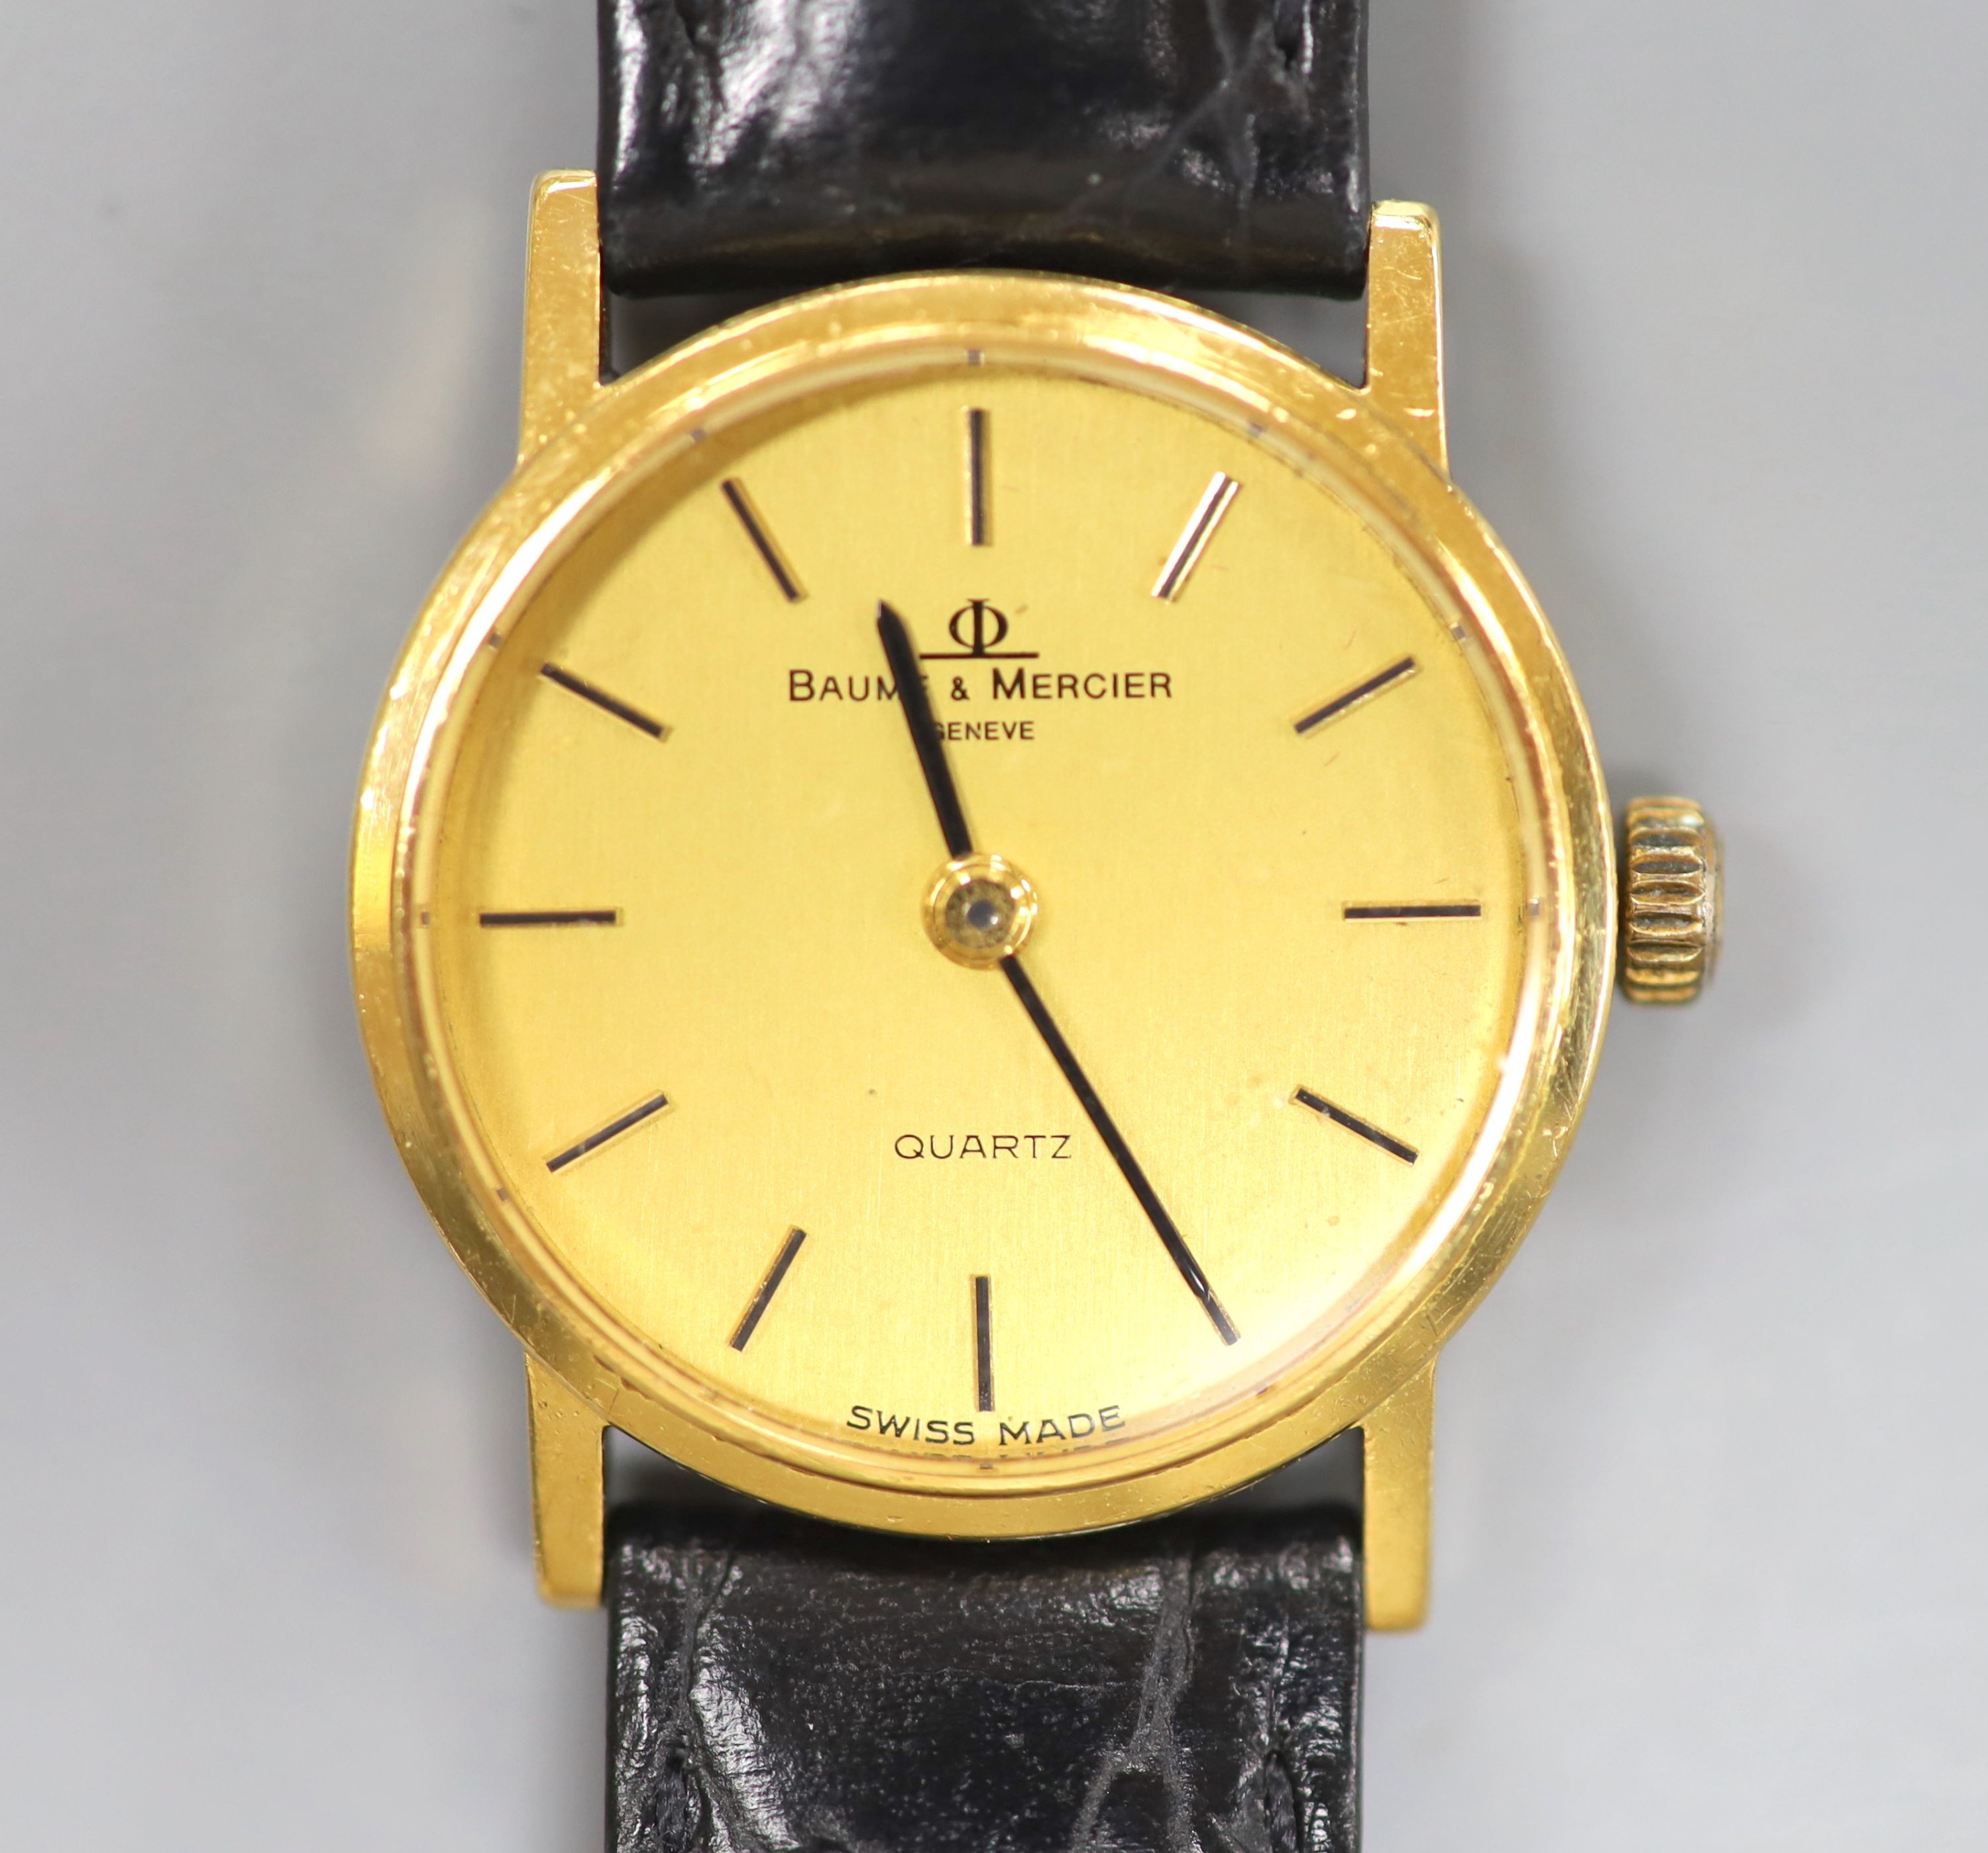 A lady's 18ct Baume & Mercier quartz wrist watch, on associated leather strap, in Baume & Mercier box